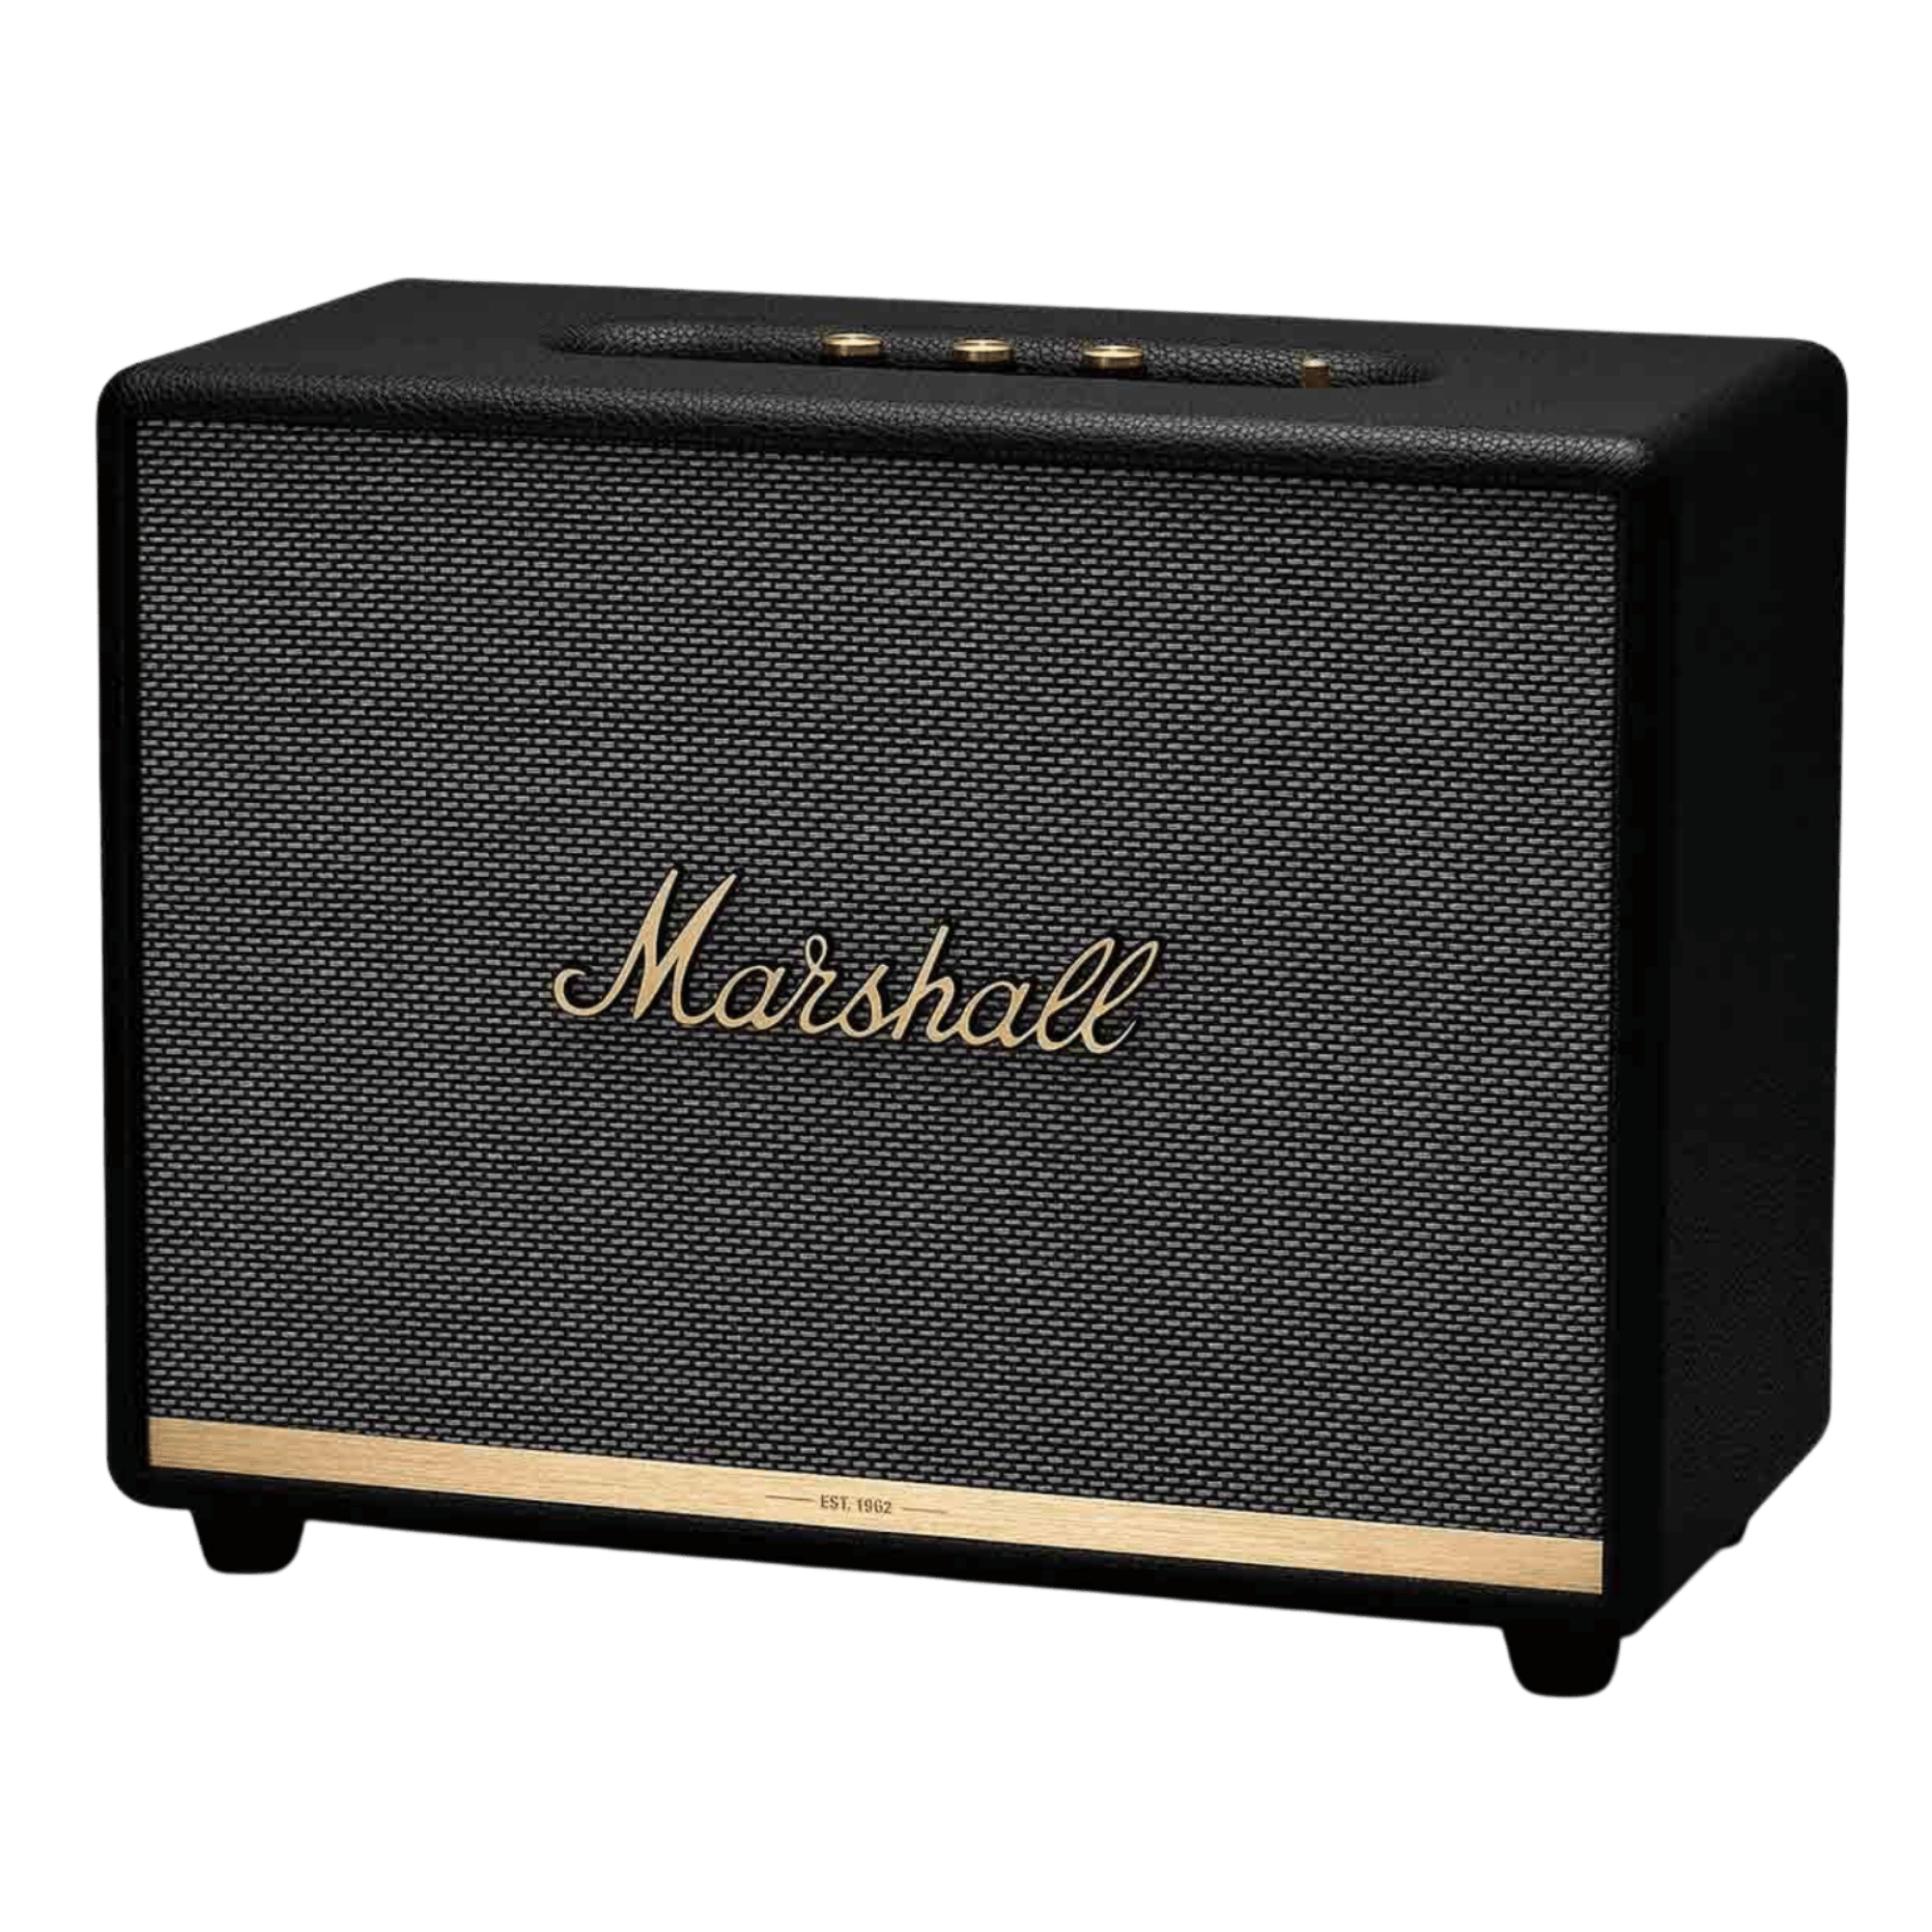 Buy Marshall Woburn II Bluetooth Speaker poorvika at best price in 